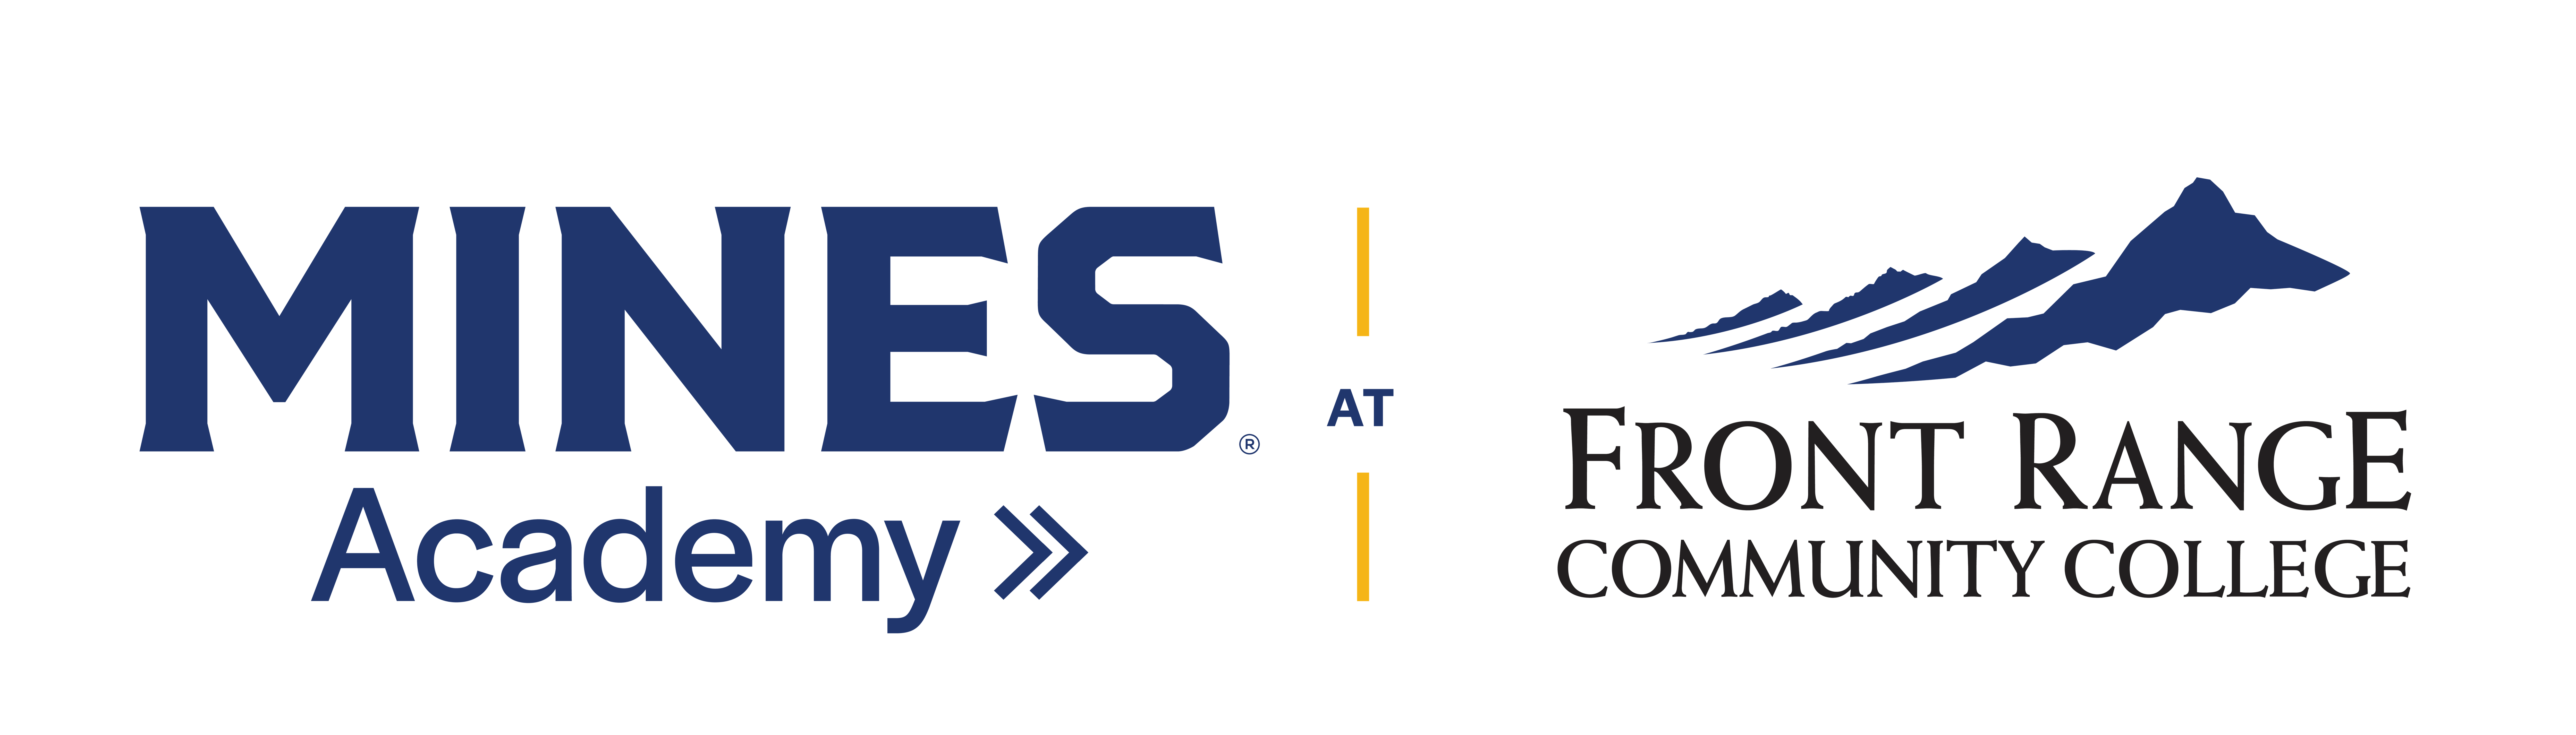 Mines Academy at FRCC logo